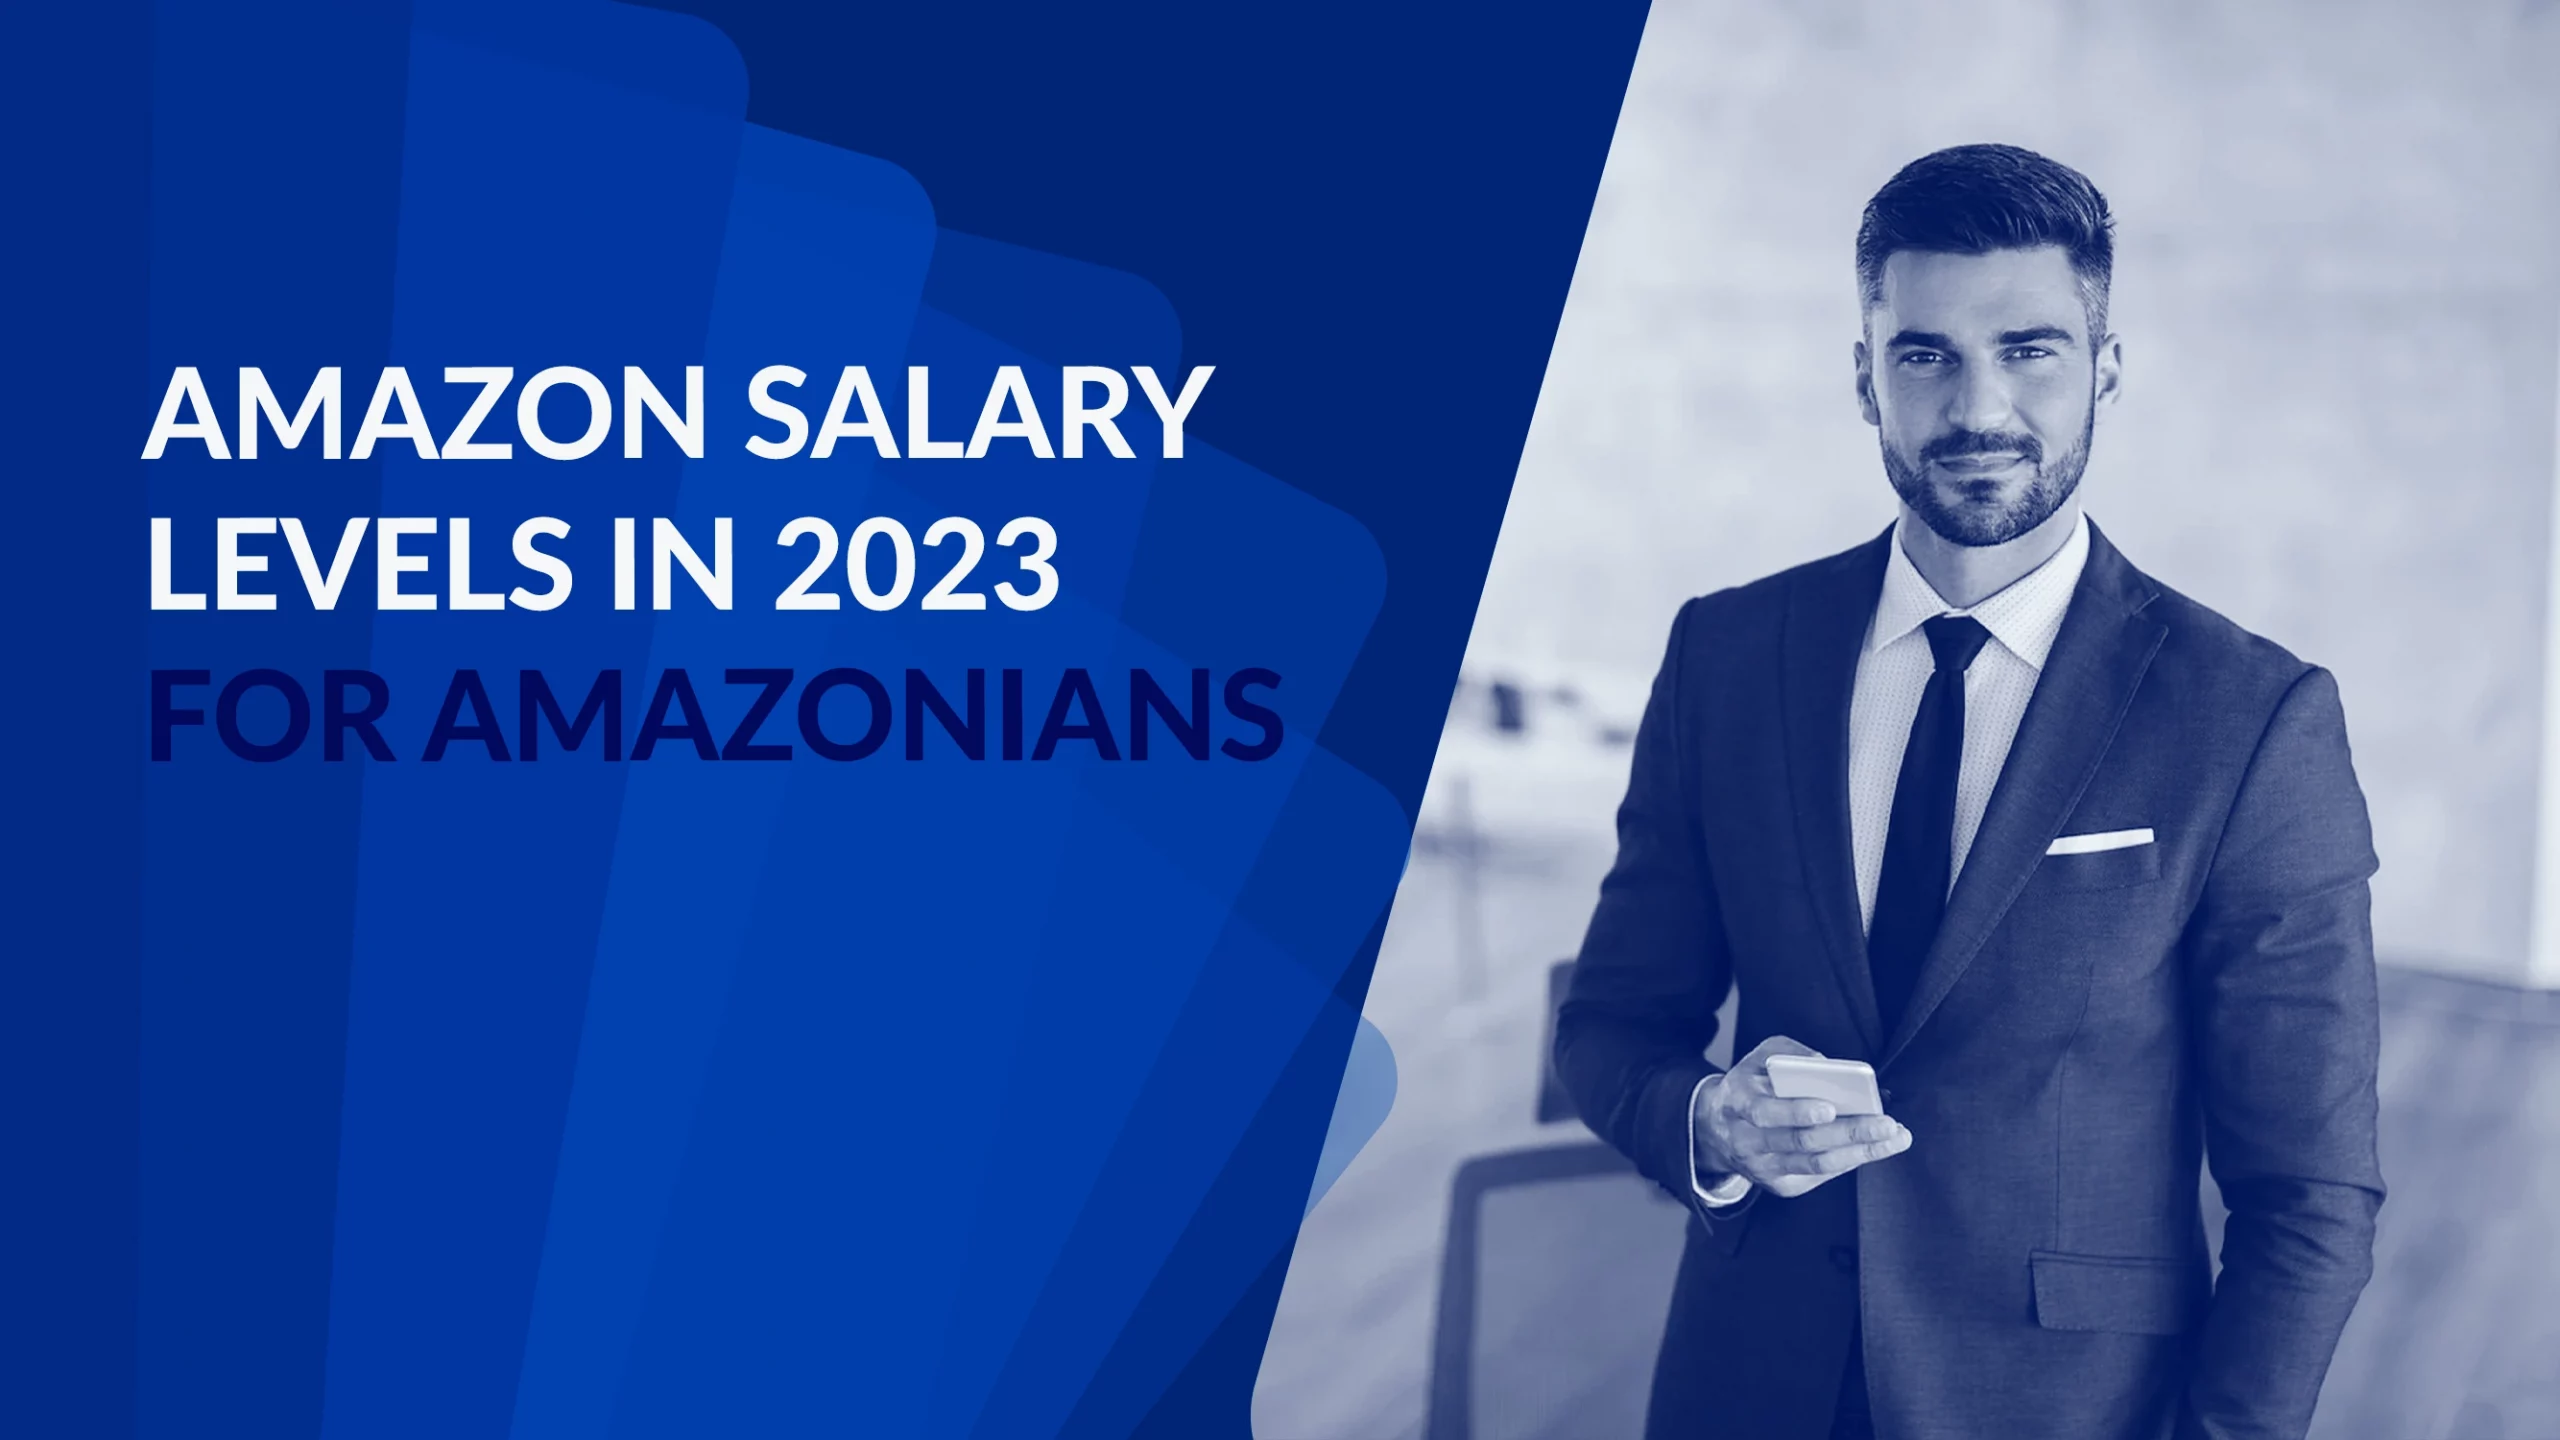 Amazon Salary Levels in 2023